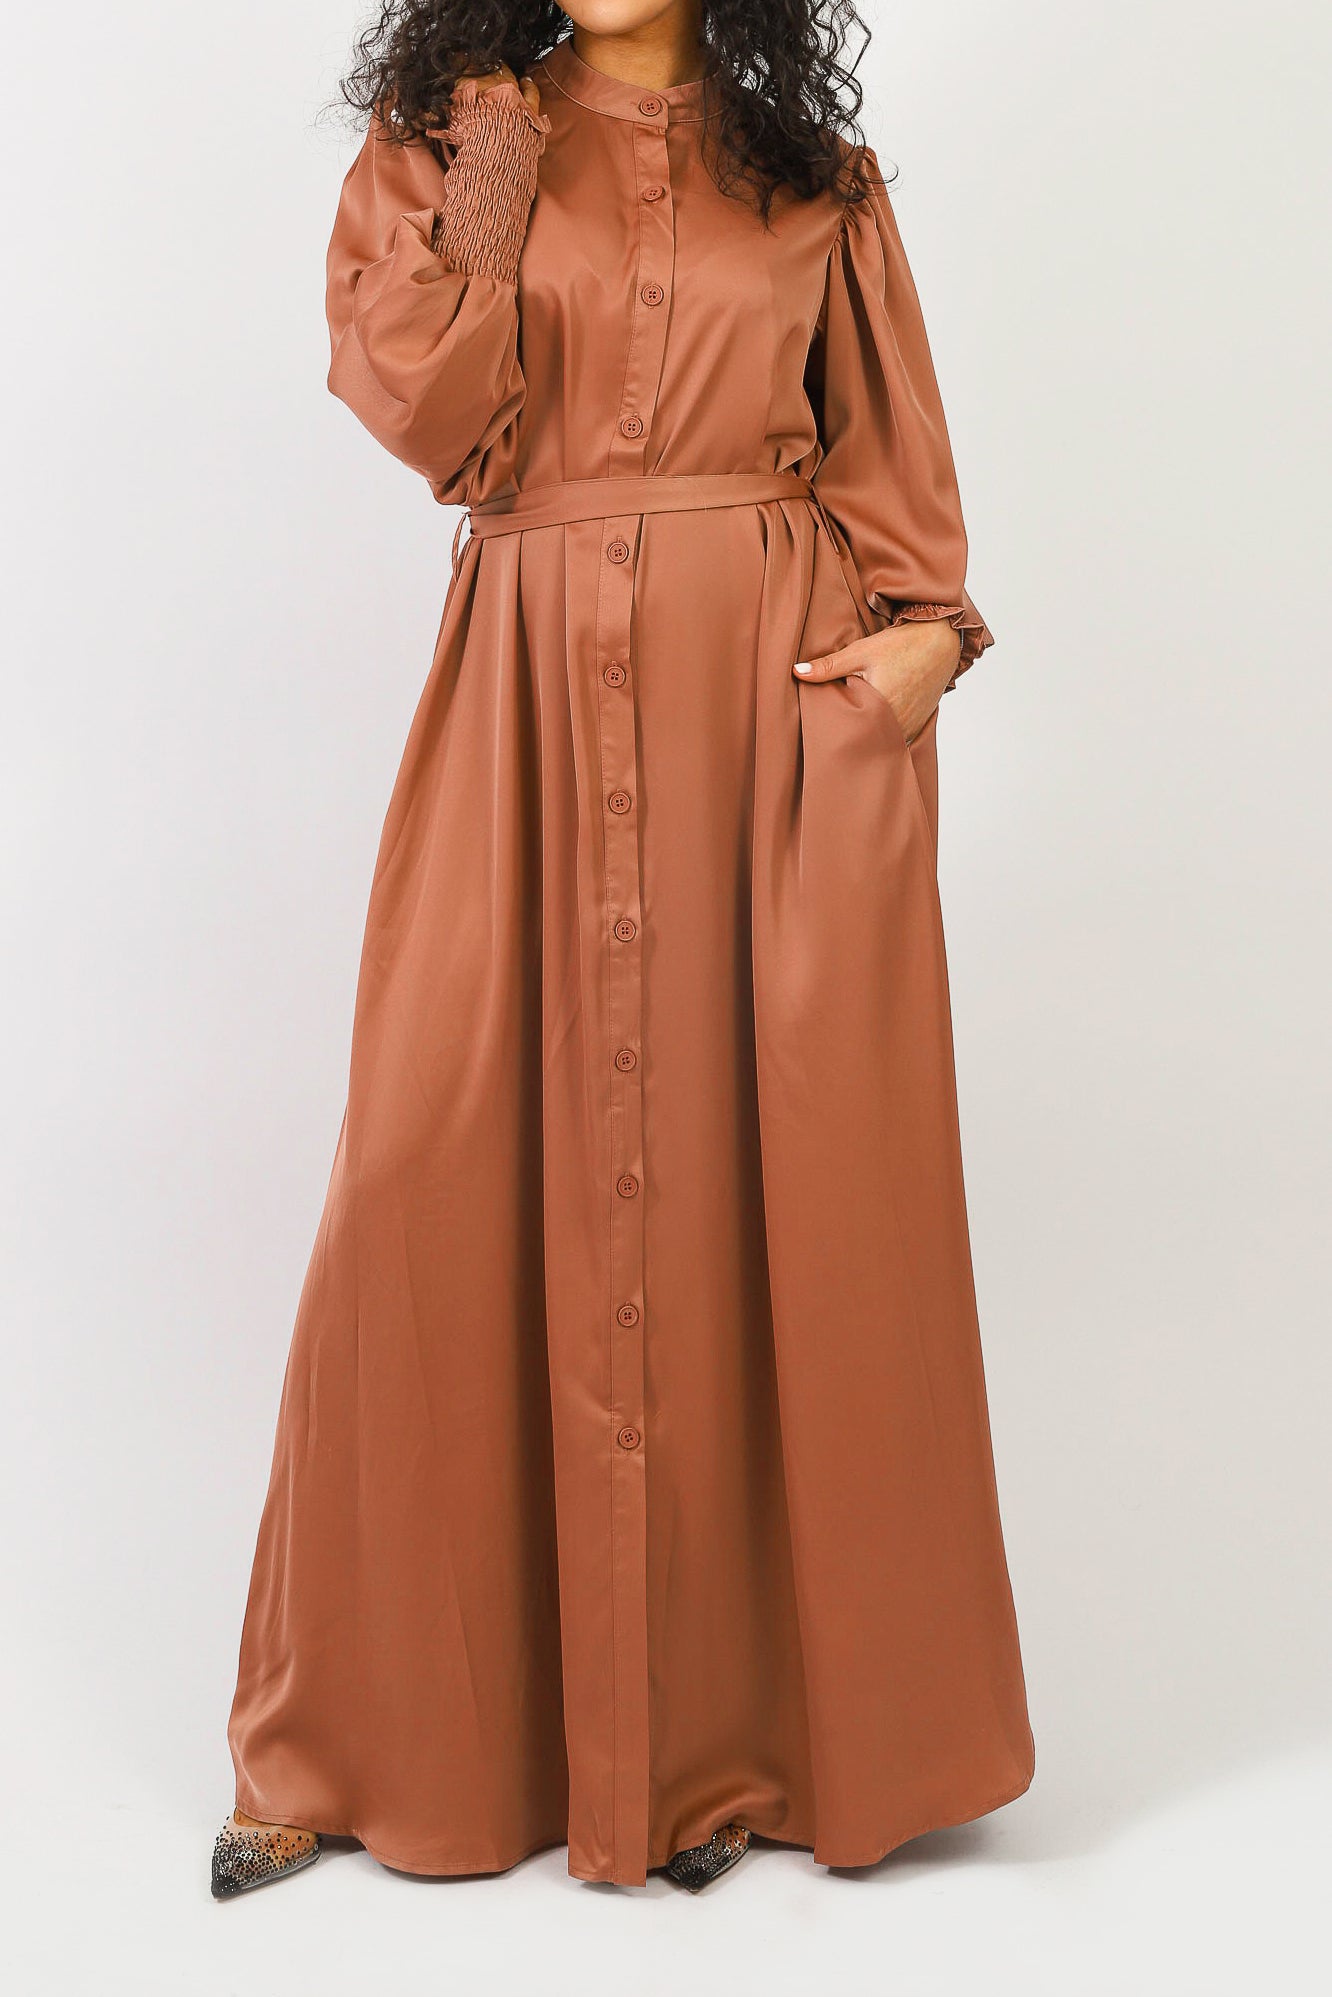 M7931Rust-dress-abaya